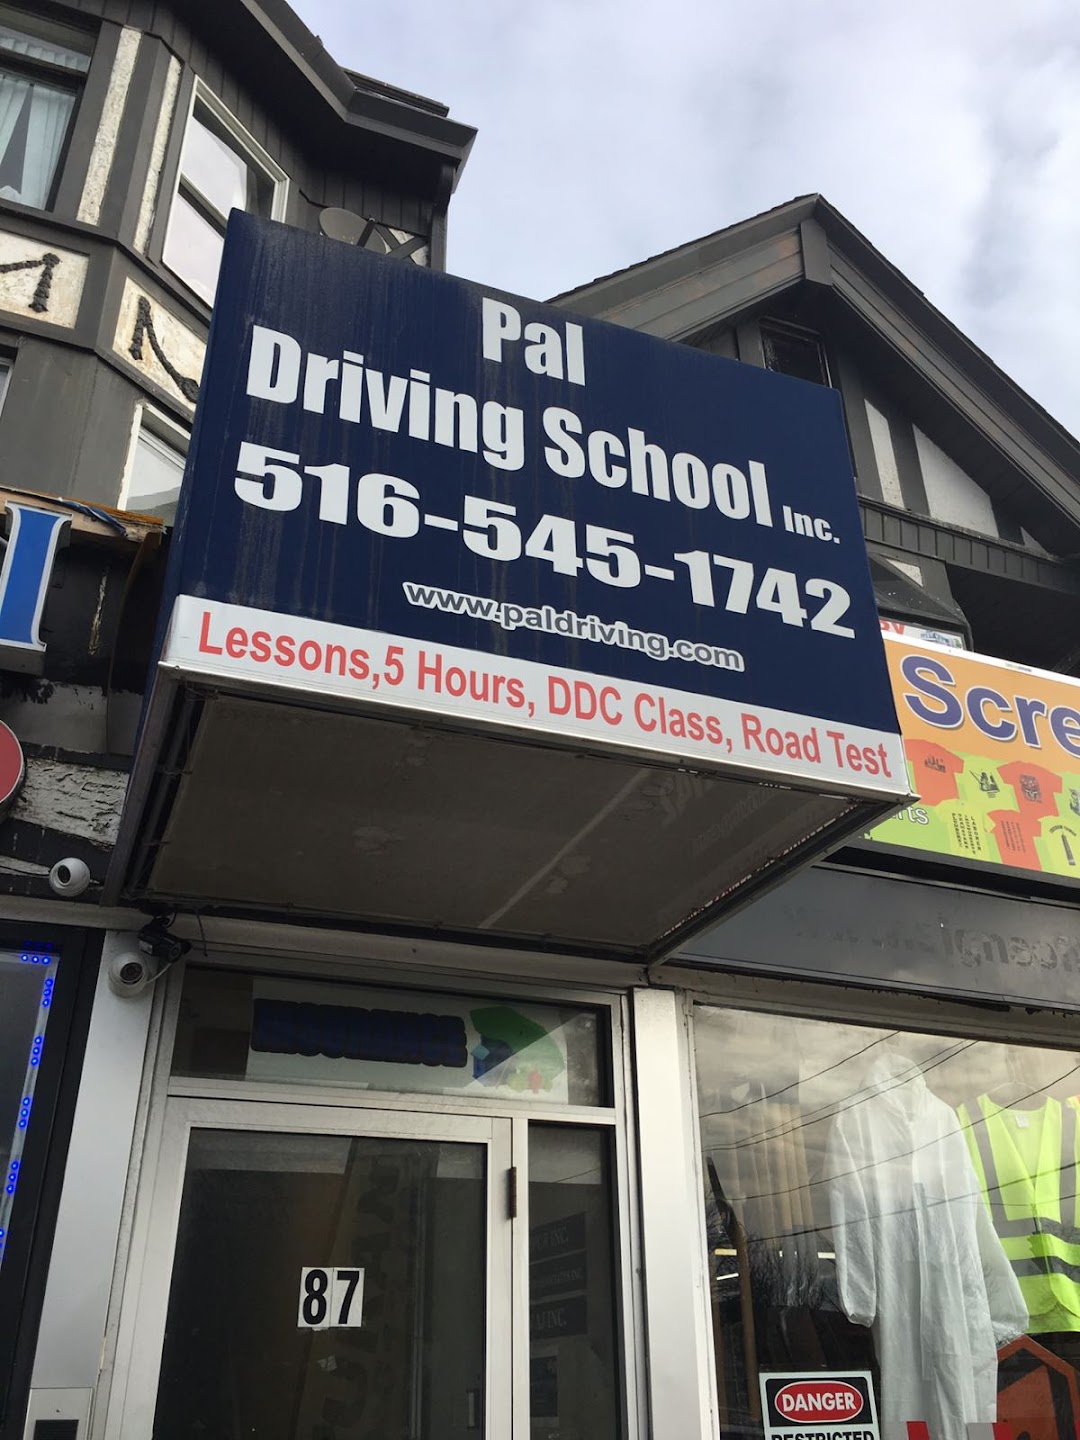 Pal Driving School Inc.